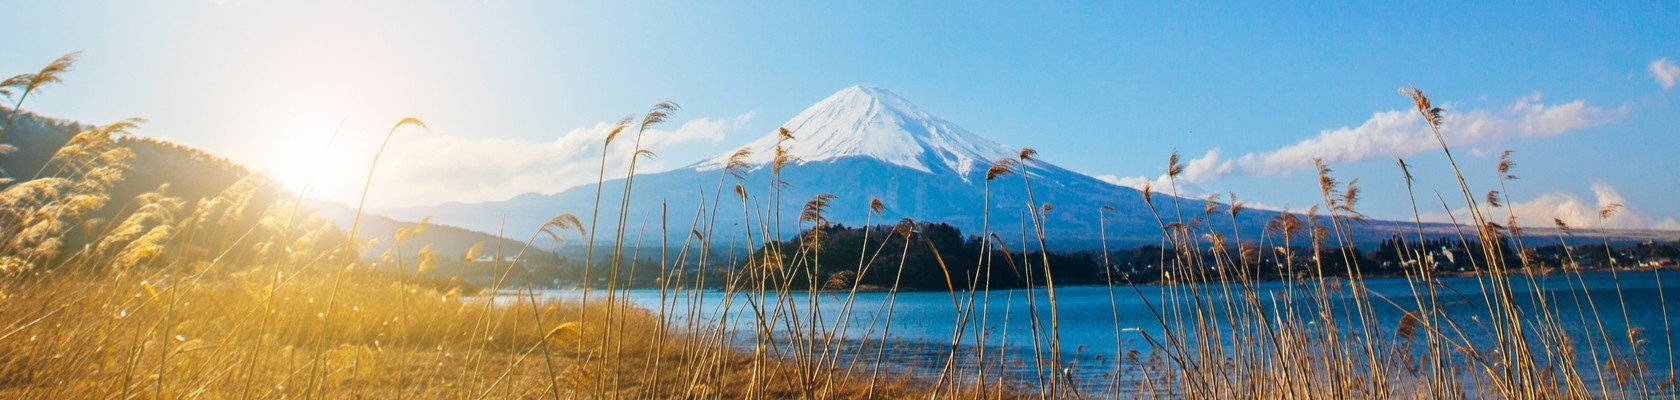 De beroemde Mount Fuji